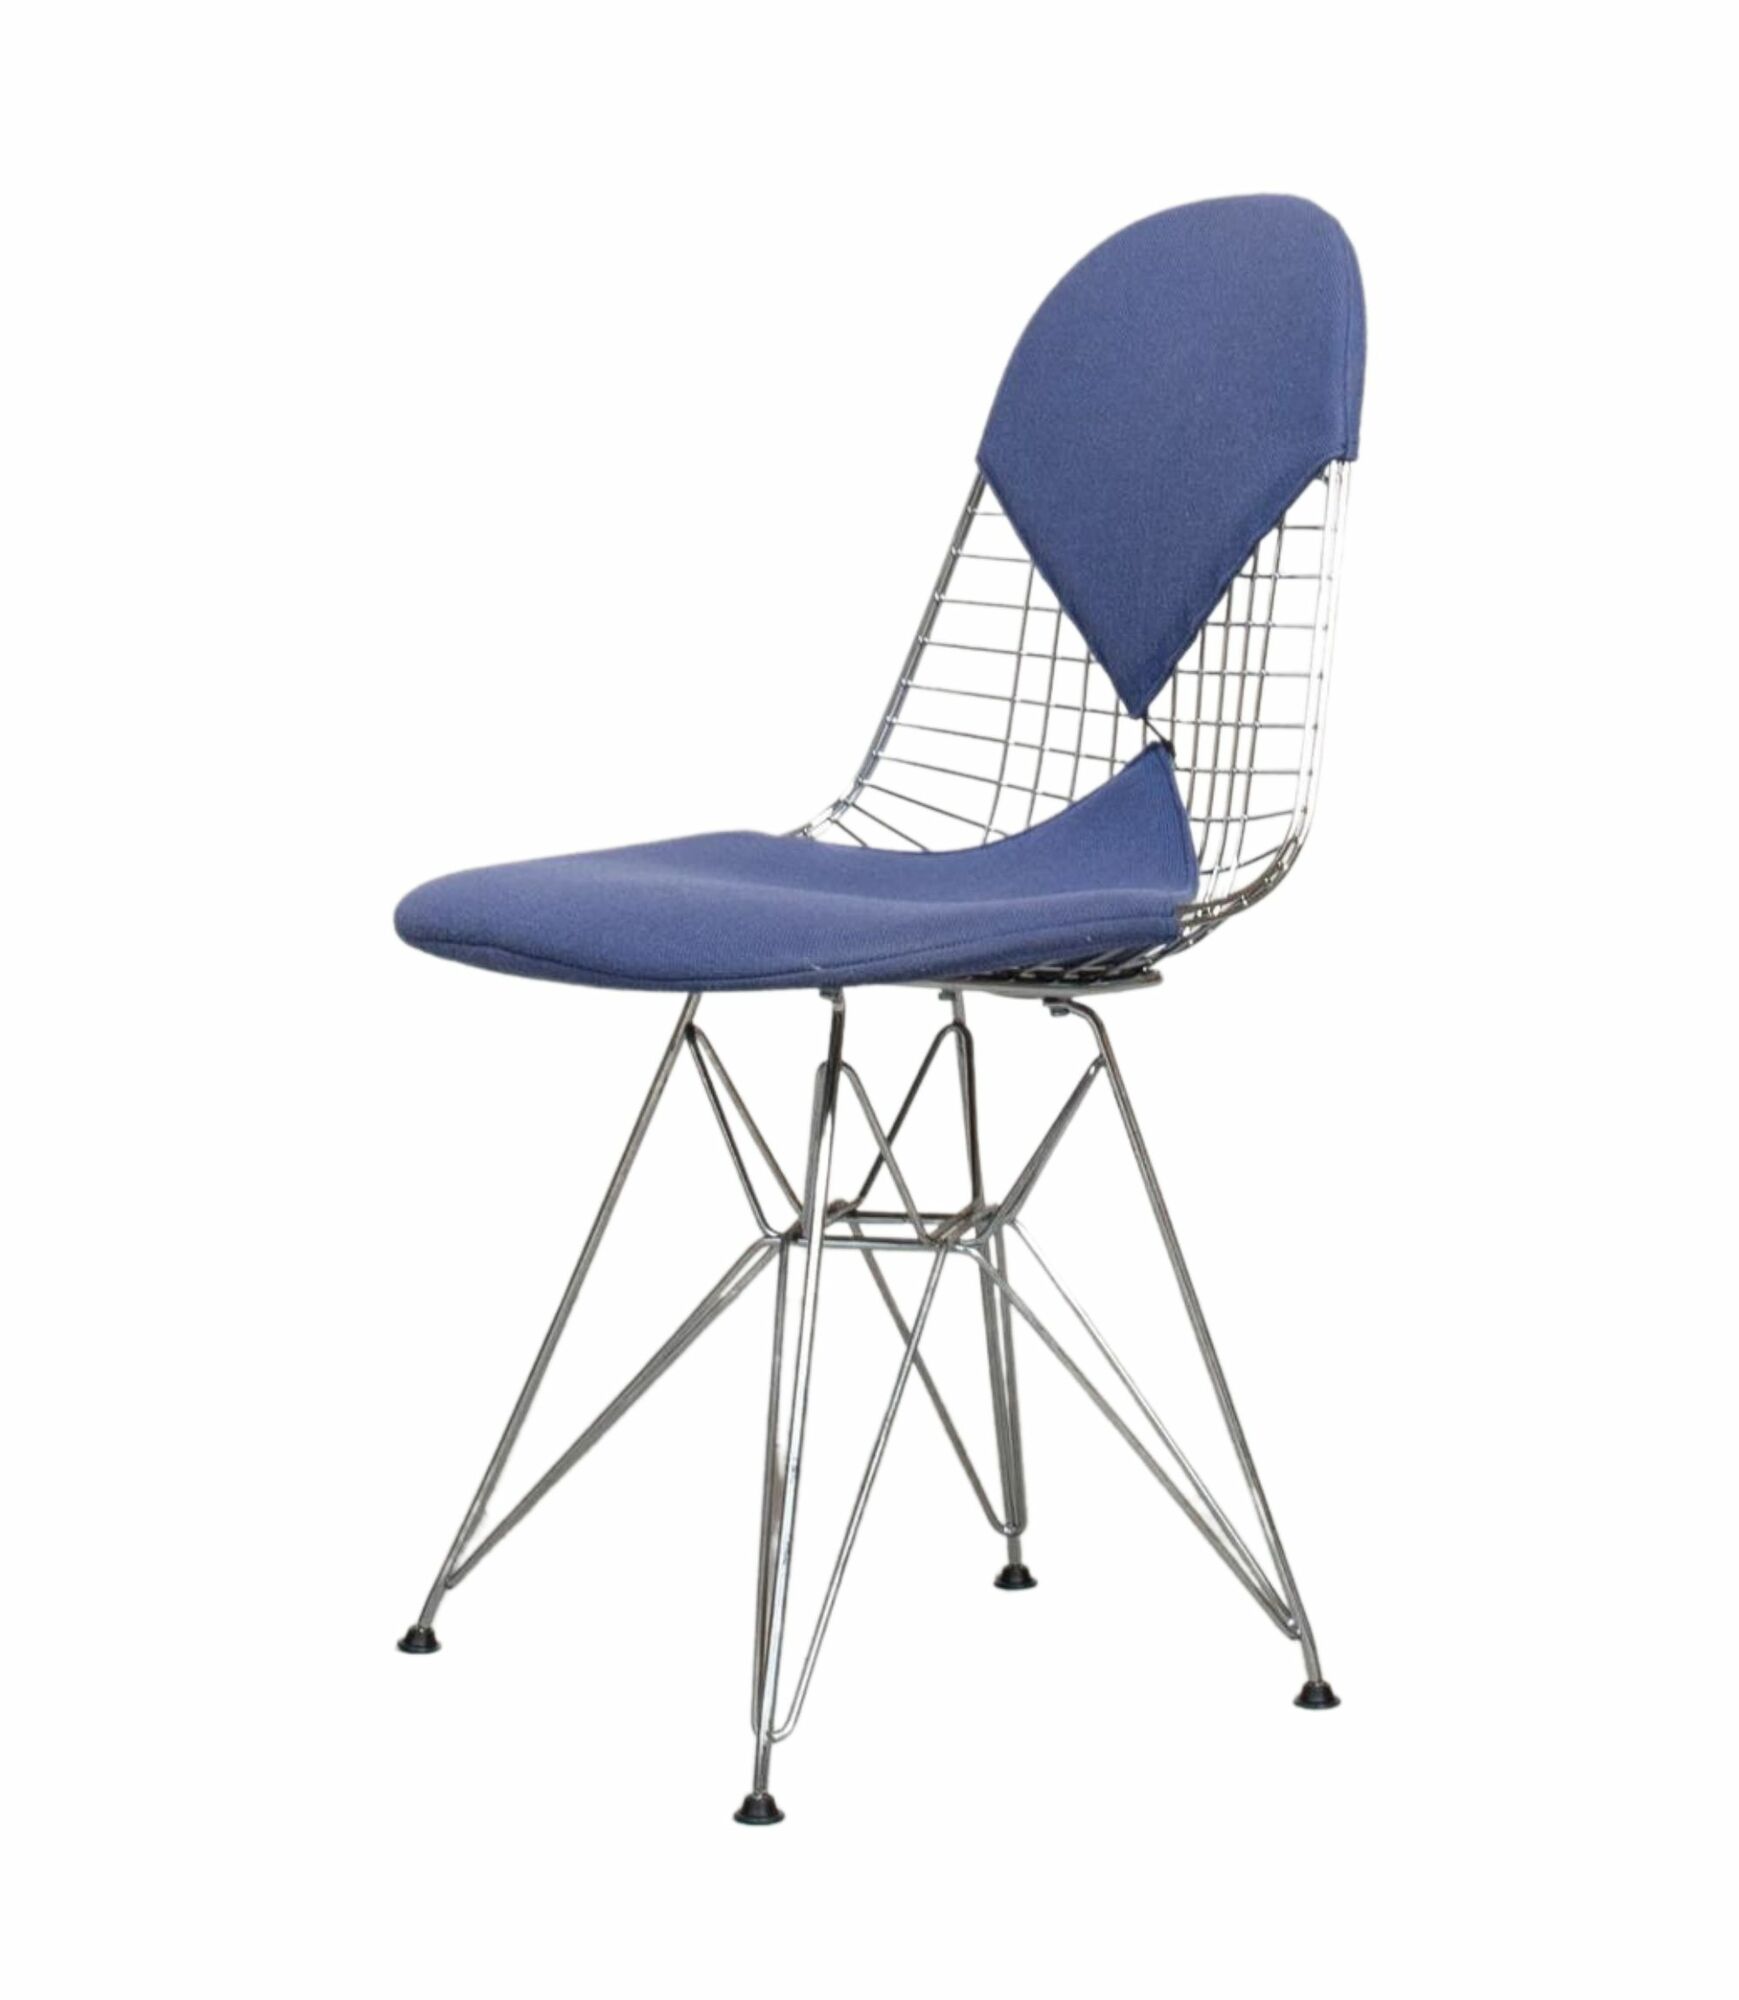 Eames Wire Chair DKR mit Polster Blau 1